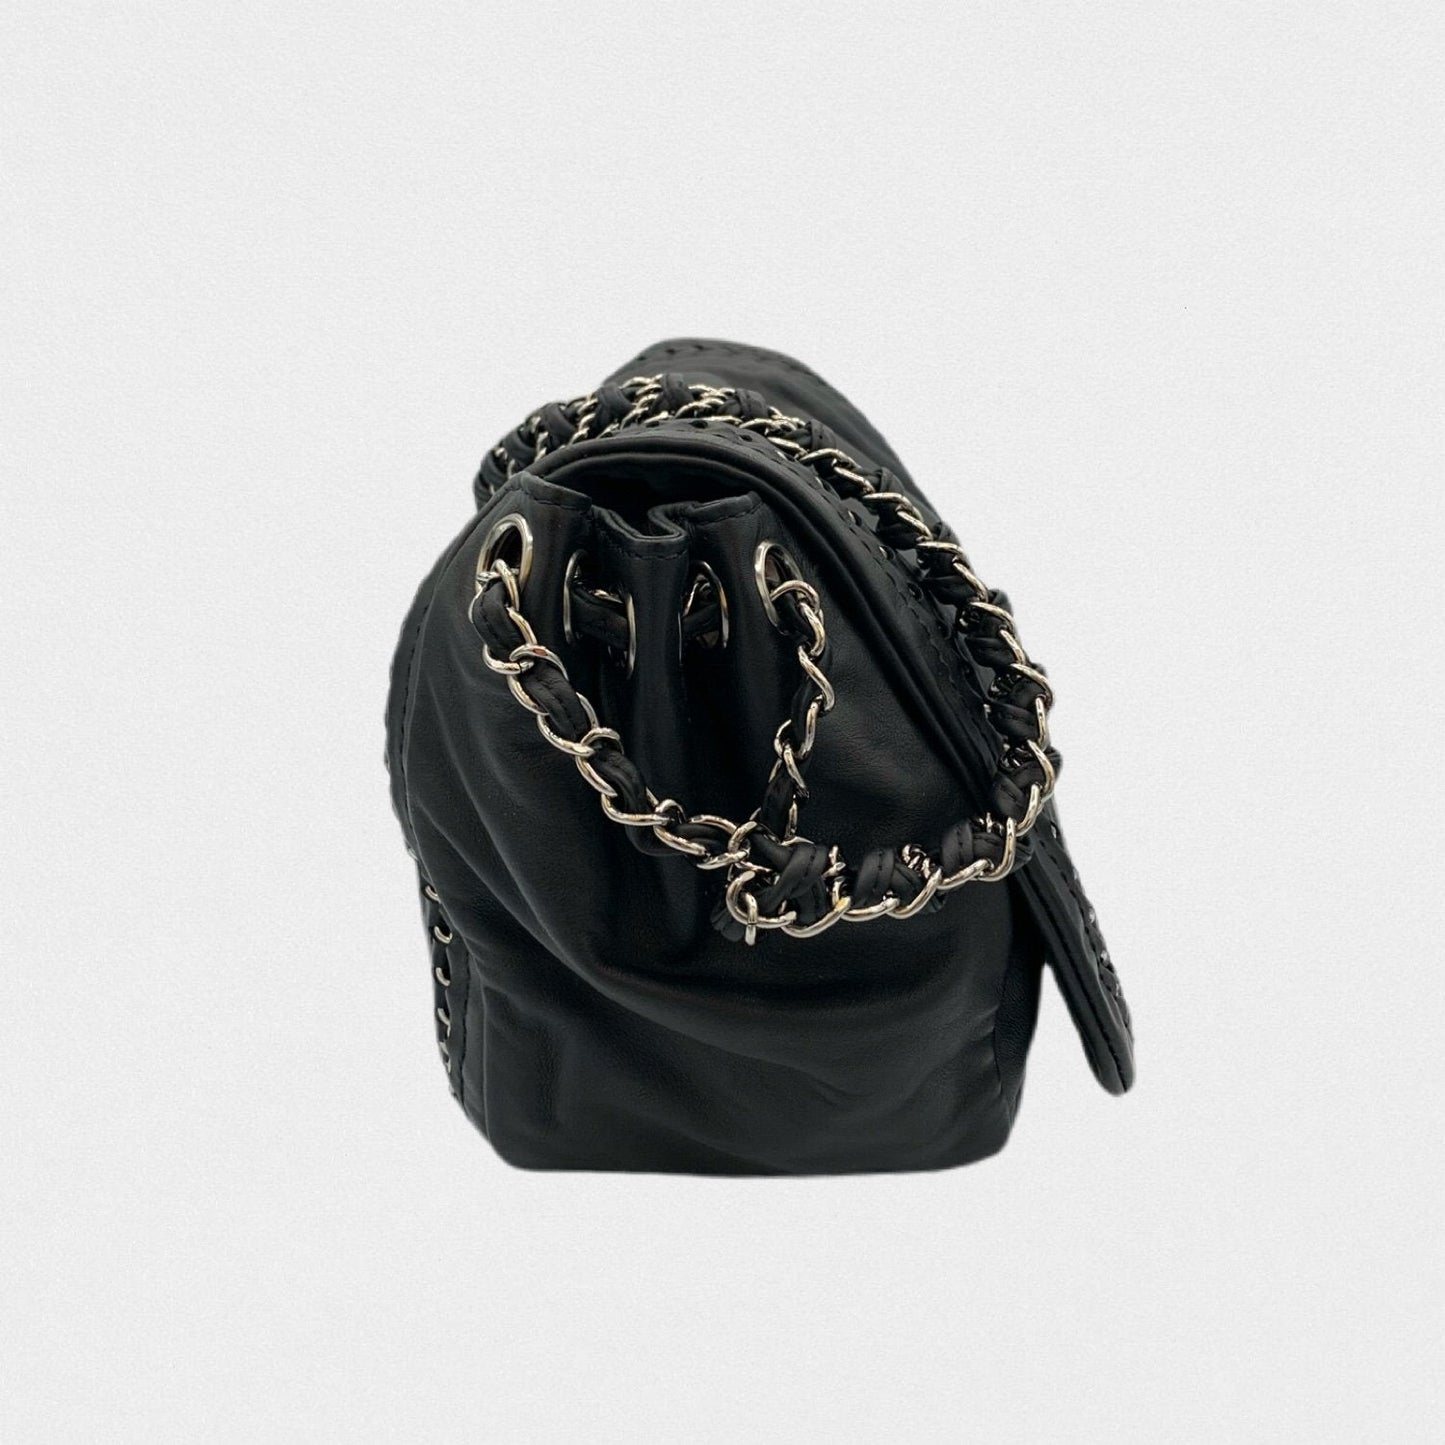 Lysis vintage Chanel satchel bag - 2010s